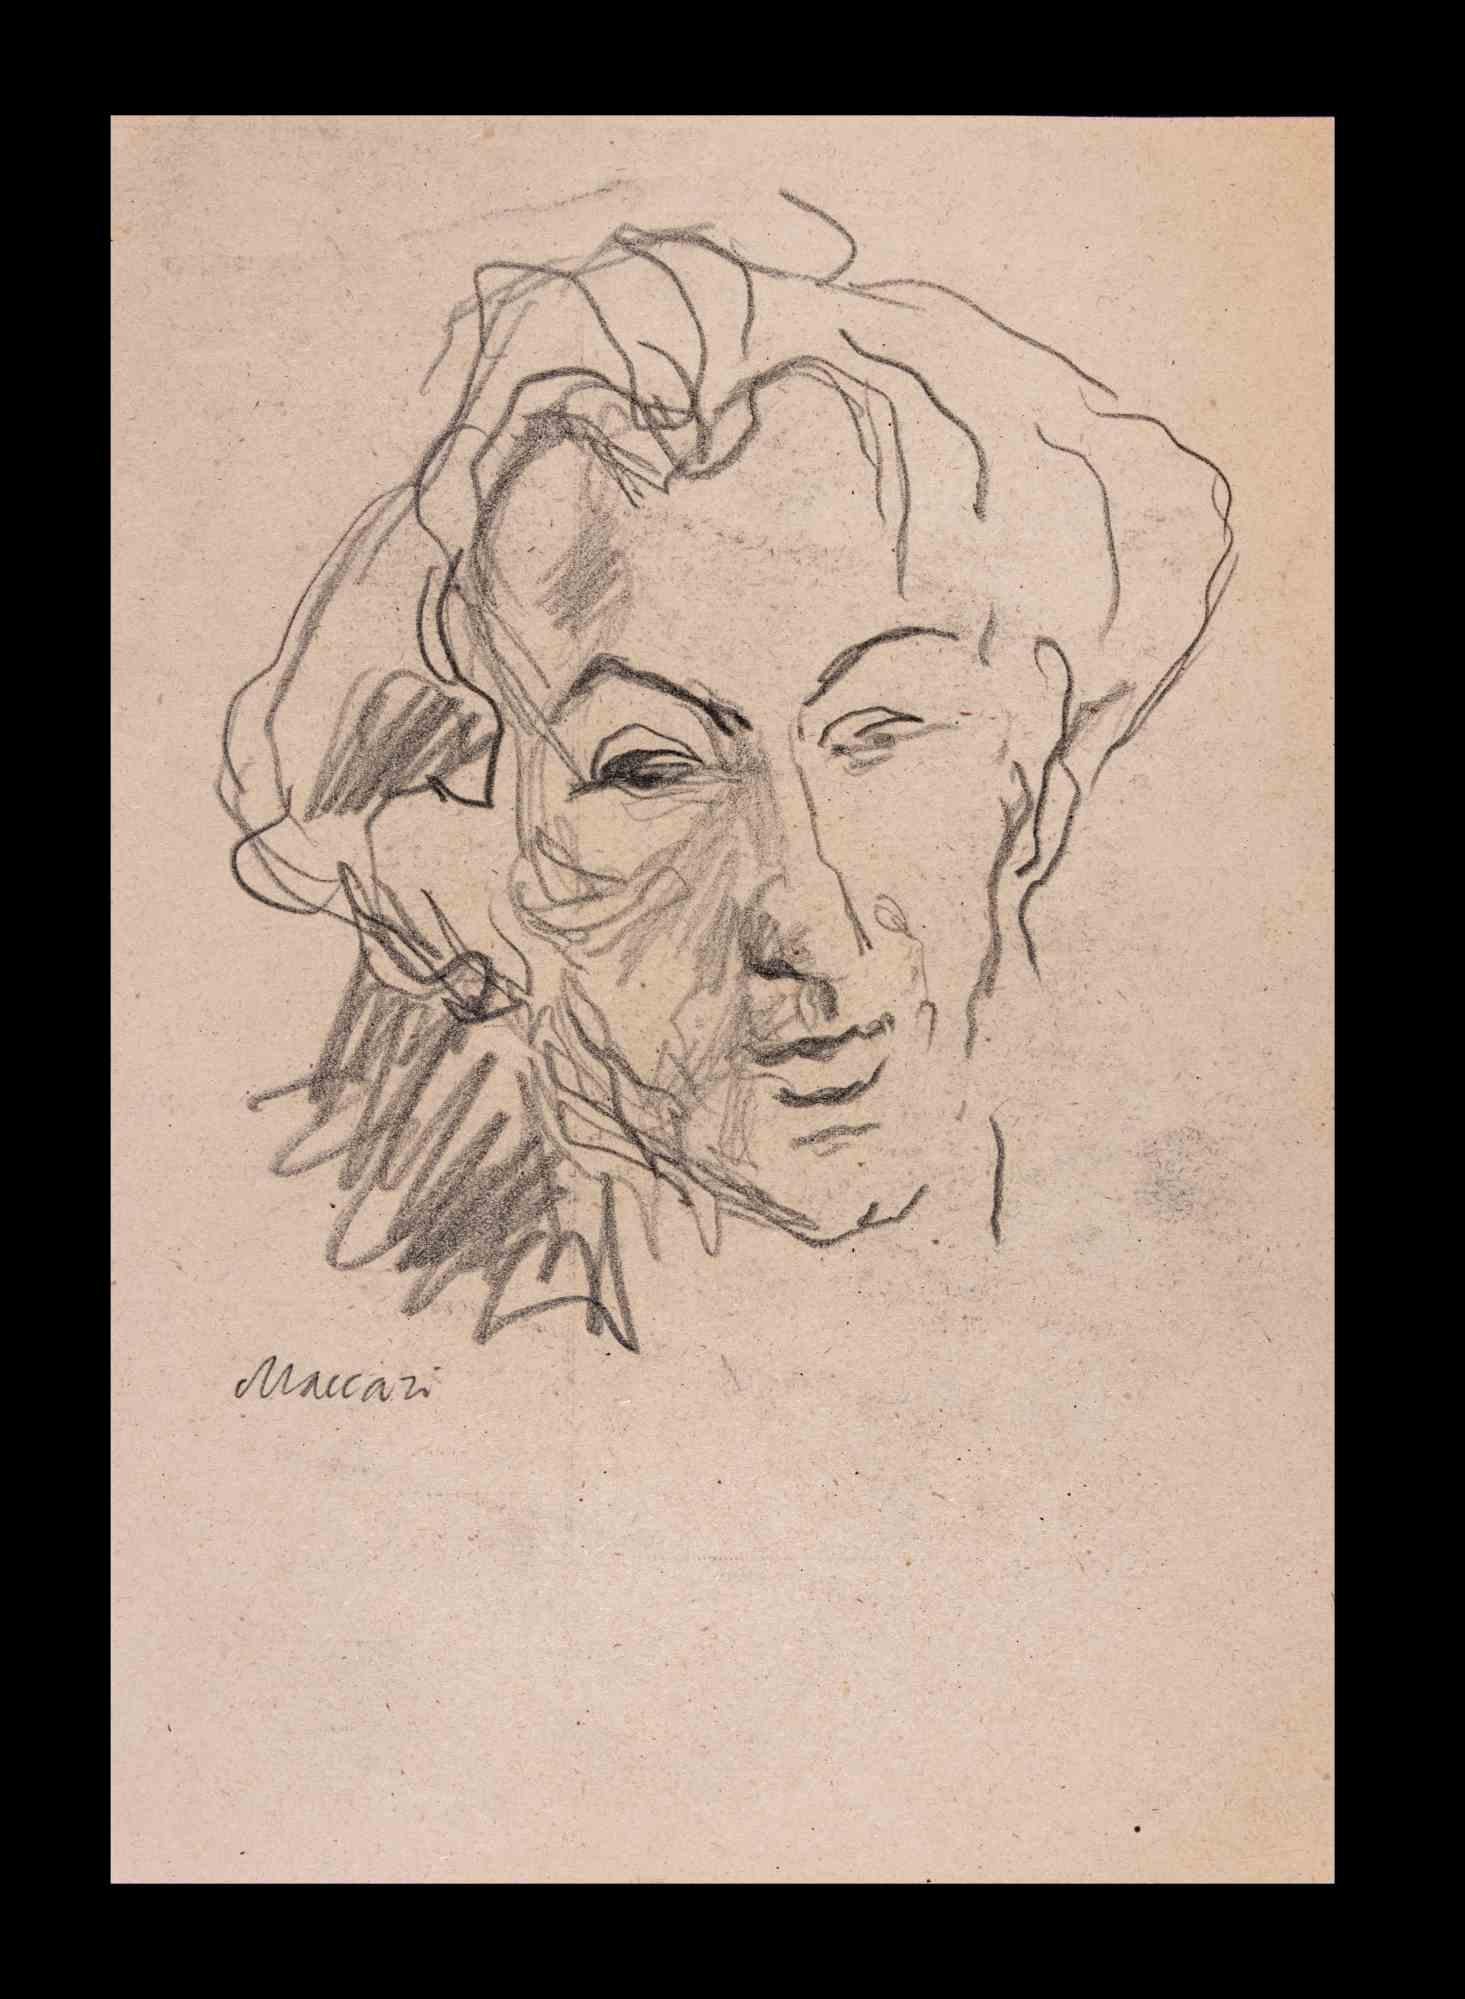 Portrait - Drawing by Mino Maccari - 1935